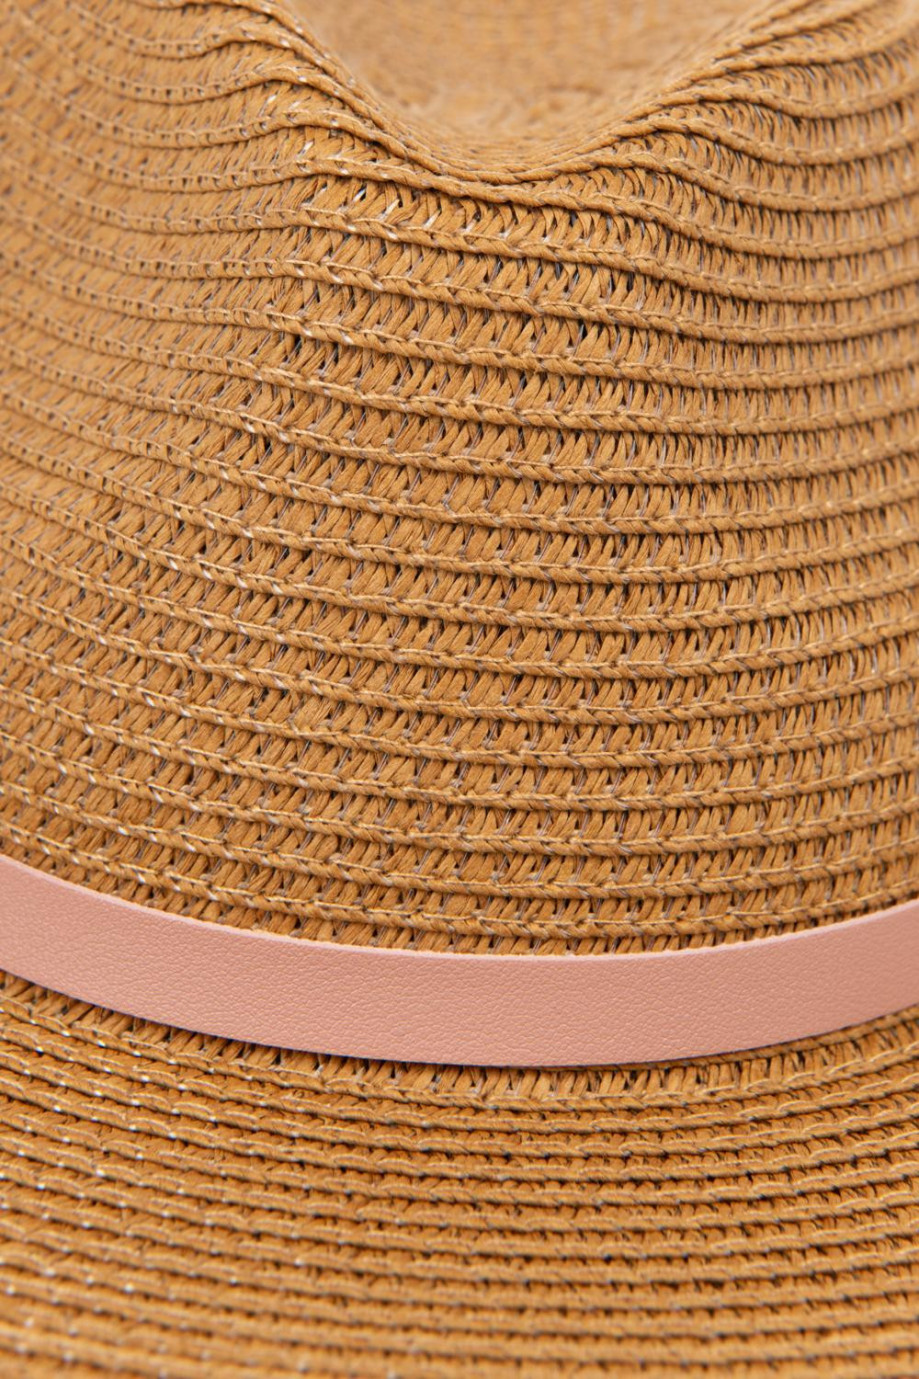 Sombrero de paja kaky oscuro con lazo rosado decorativo